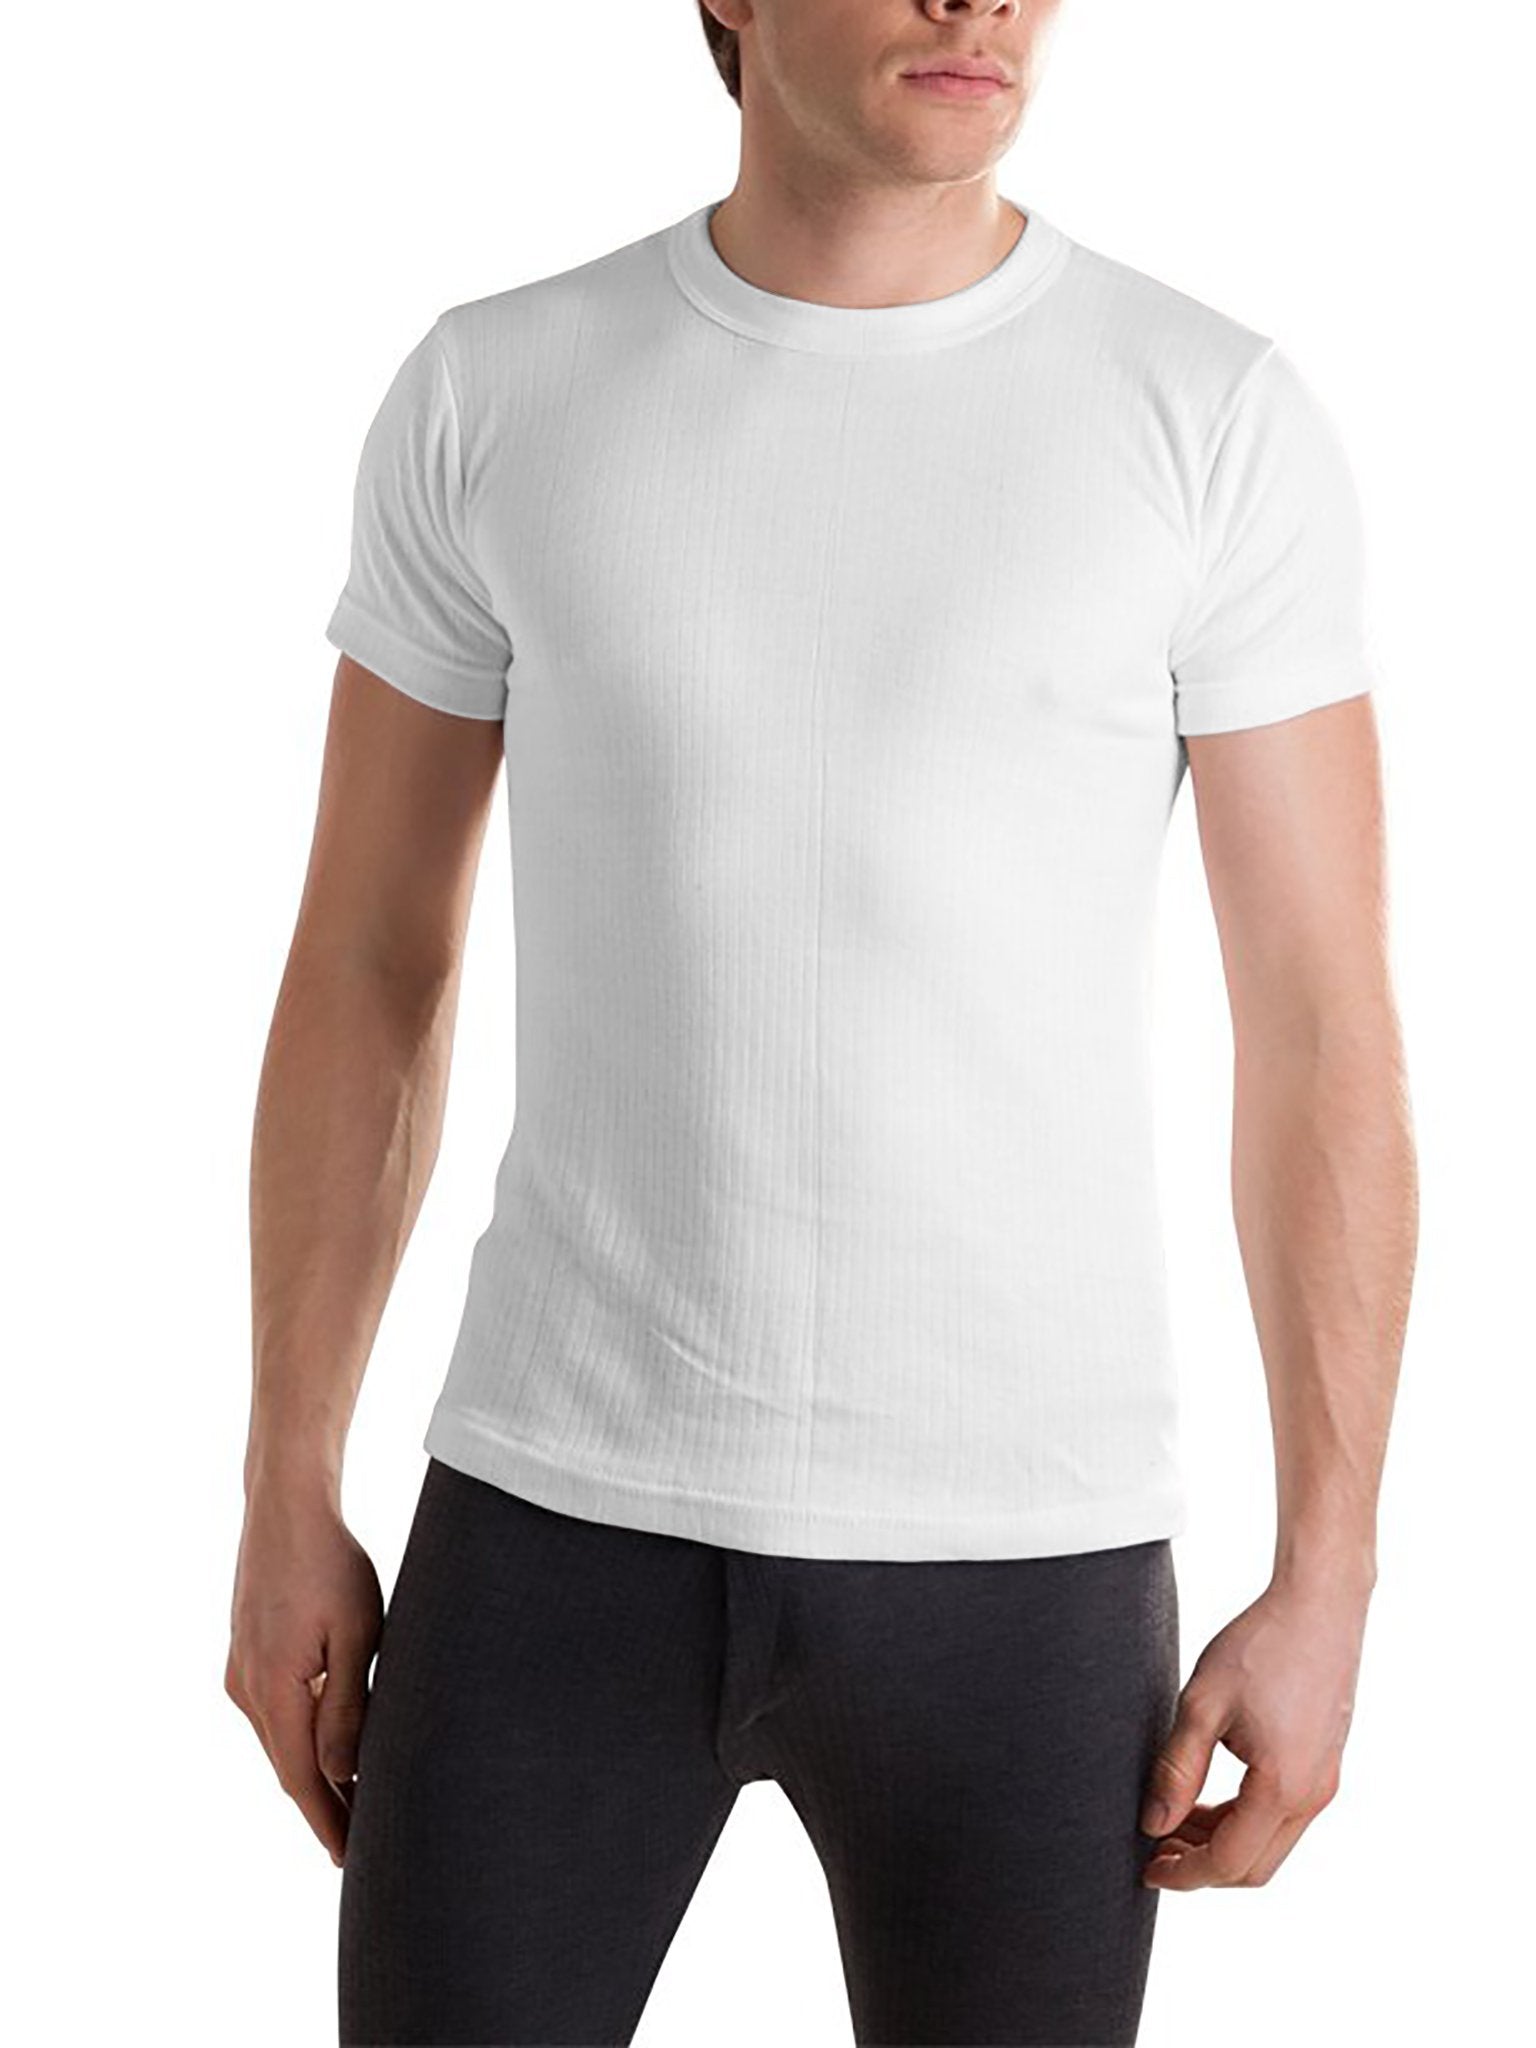 Next Thermal Under Jacket Half Sleeve Shirt For Men-White-SP1185/RT2299